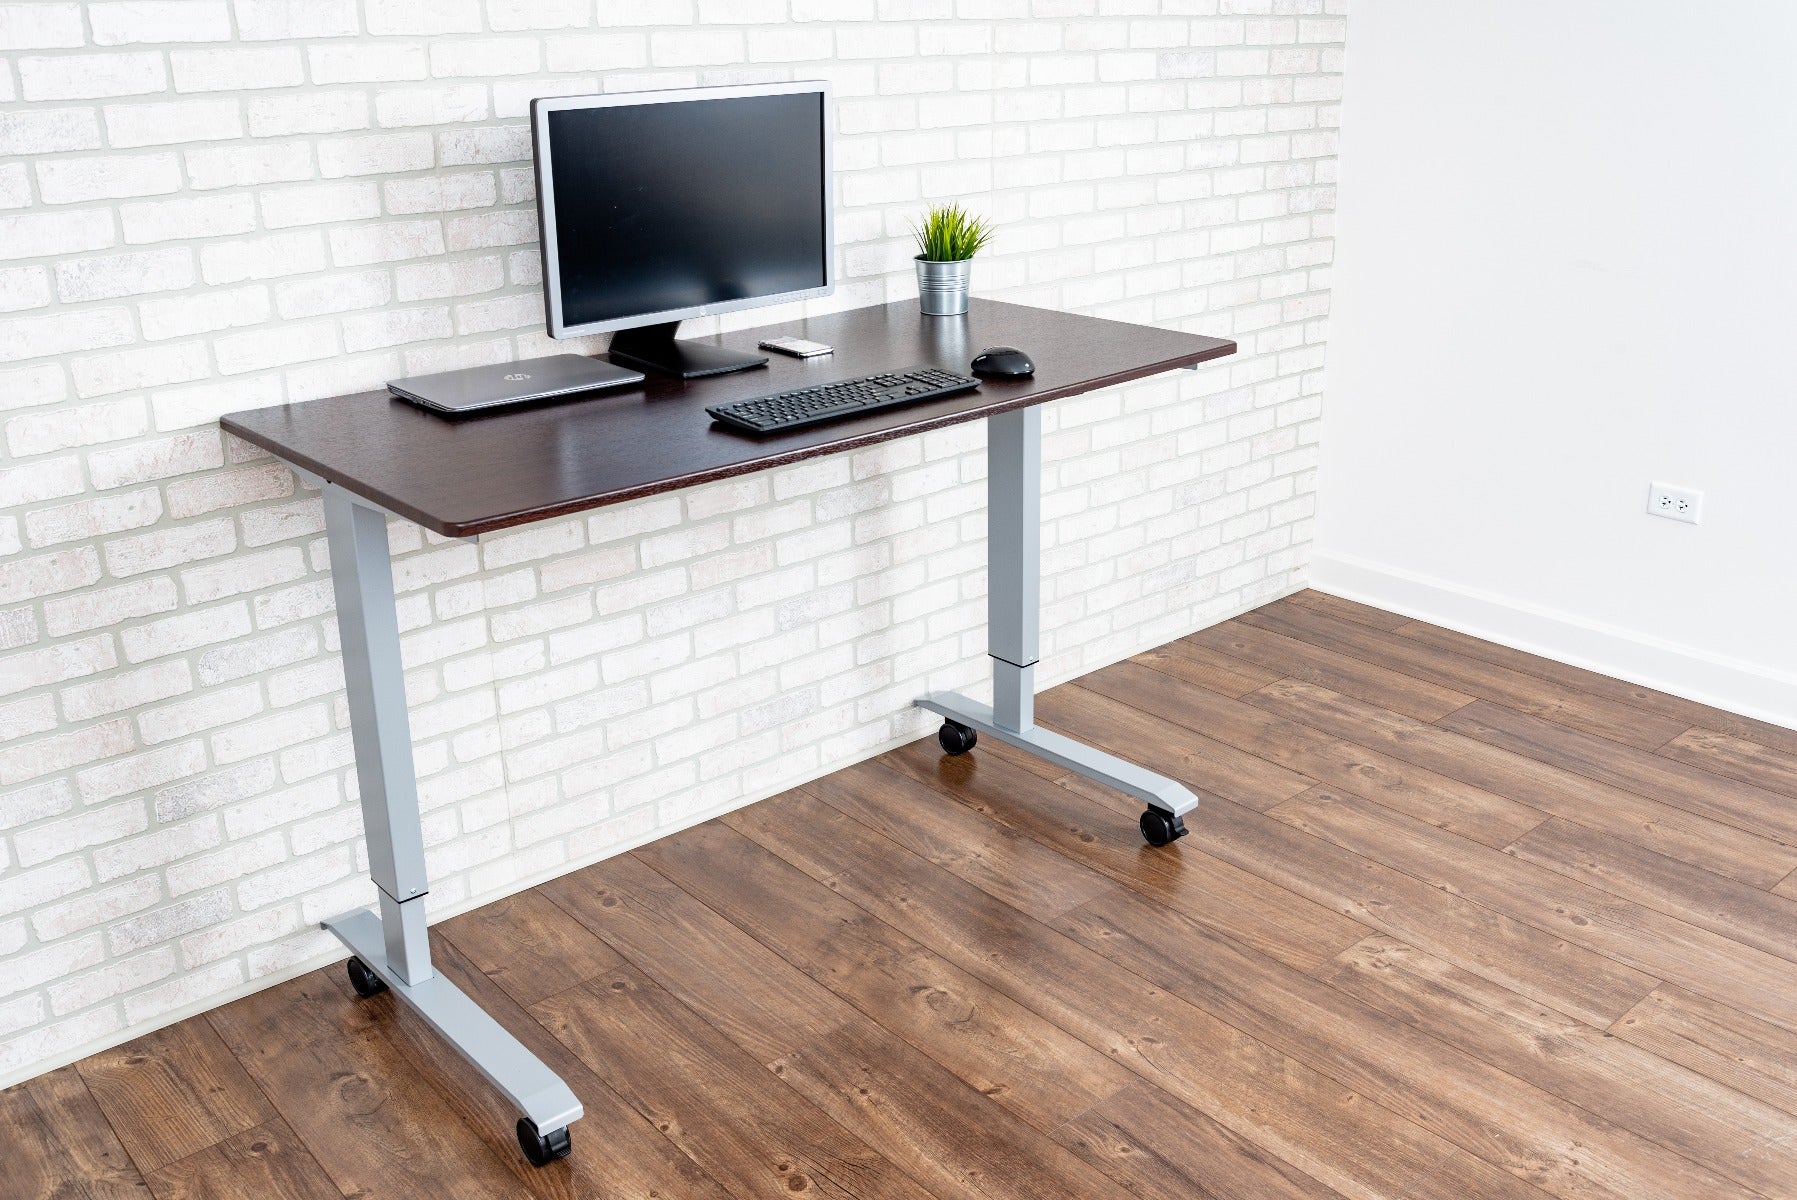 Luxor Standup-Cf60-Dw - 60 Crank Adjustable Stand Up Desk